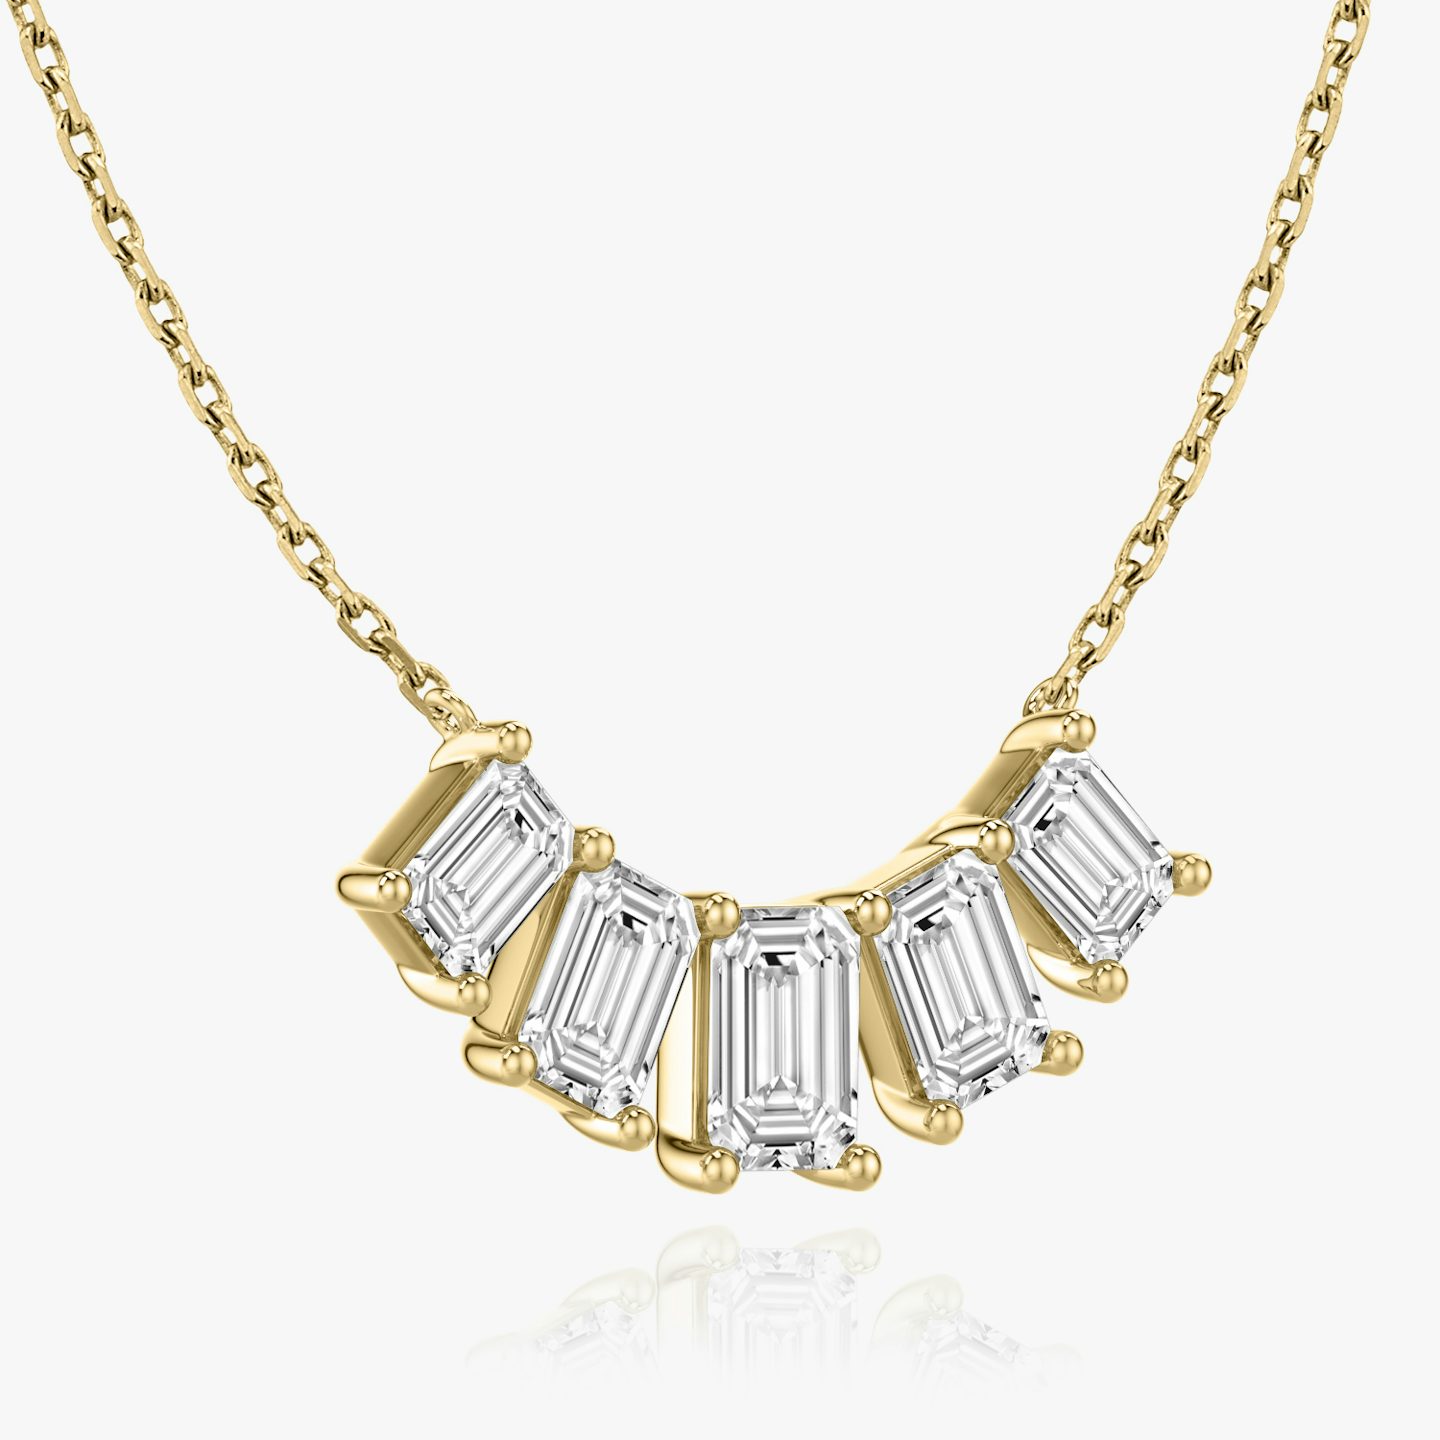 undefined | Emerald | 14k | Yellow Gold | diamondCount: 5 | diamondSize: large | chainLength: 16-18